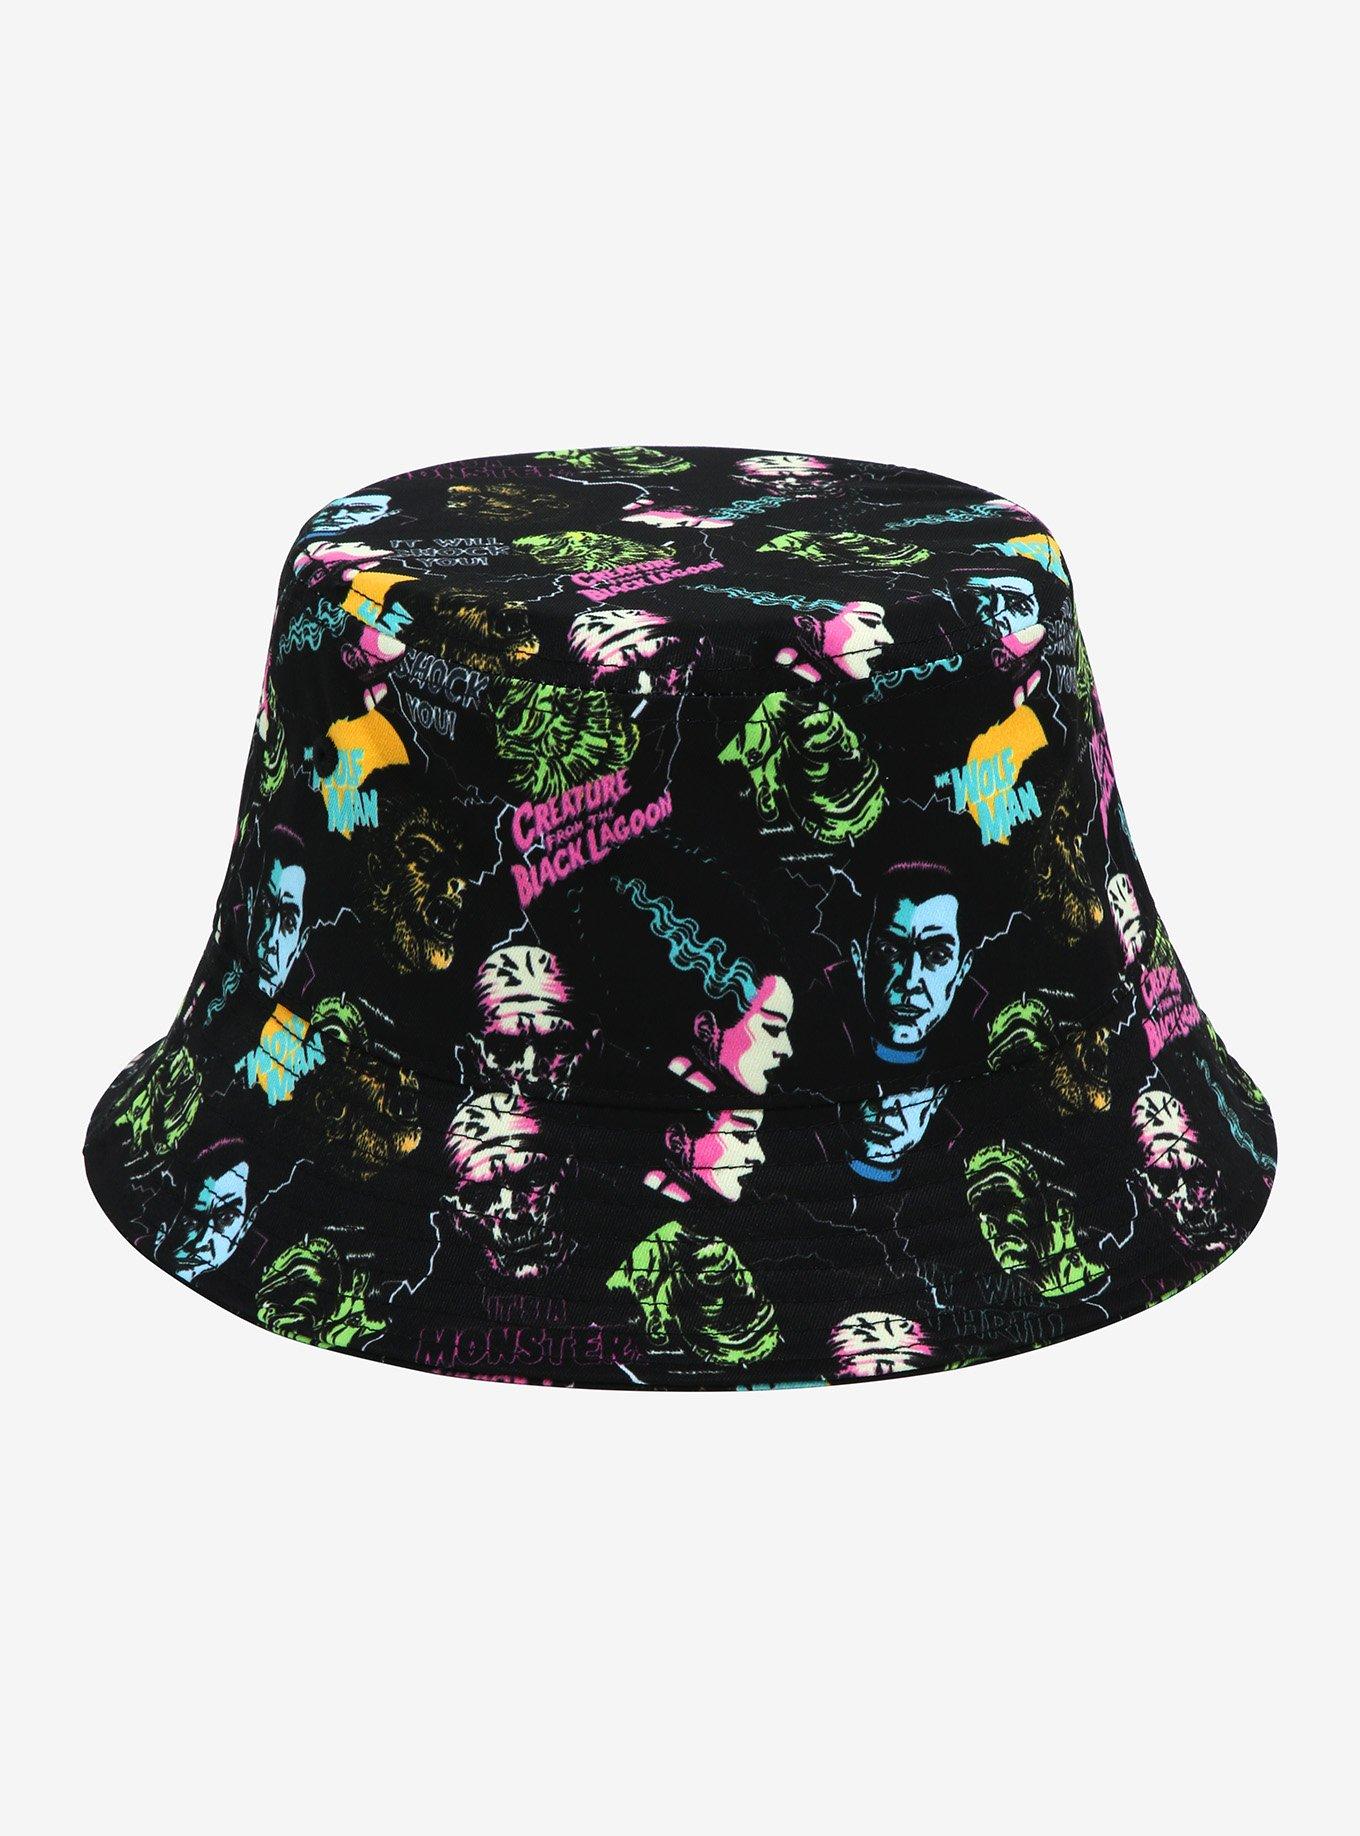 Universal Monsters® X Levi's® Bucket Hat - Multi-color